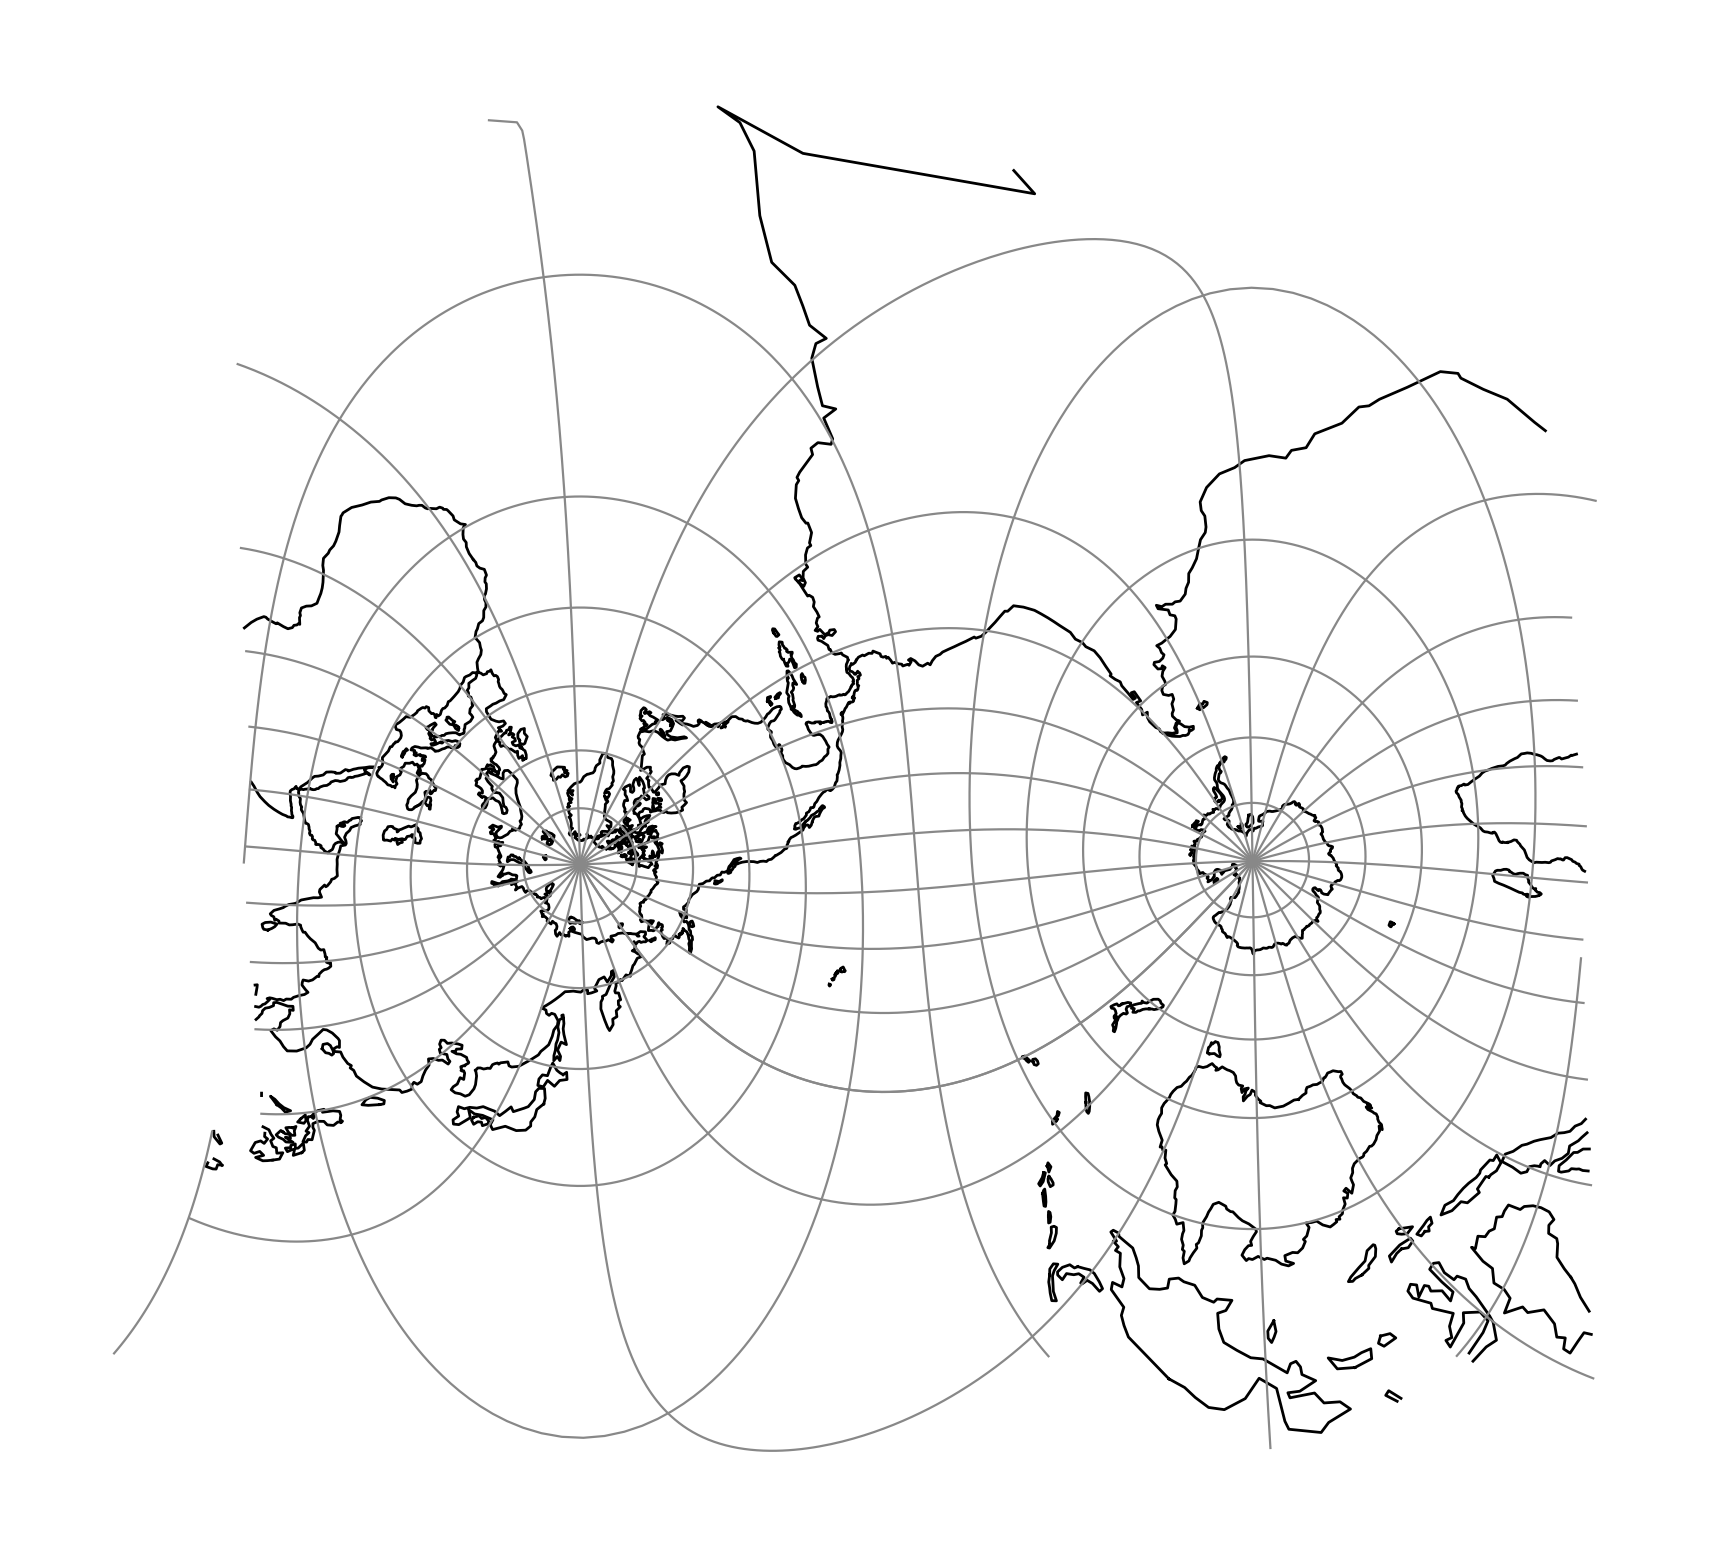 Space Oblique Mercator (SOM)